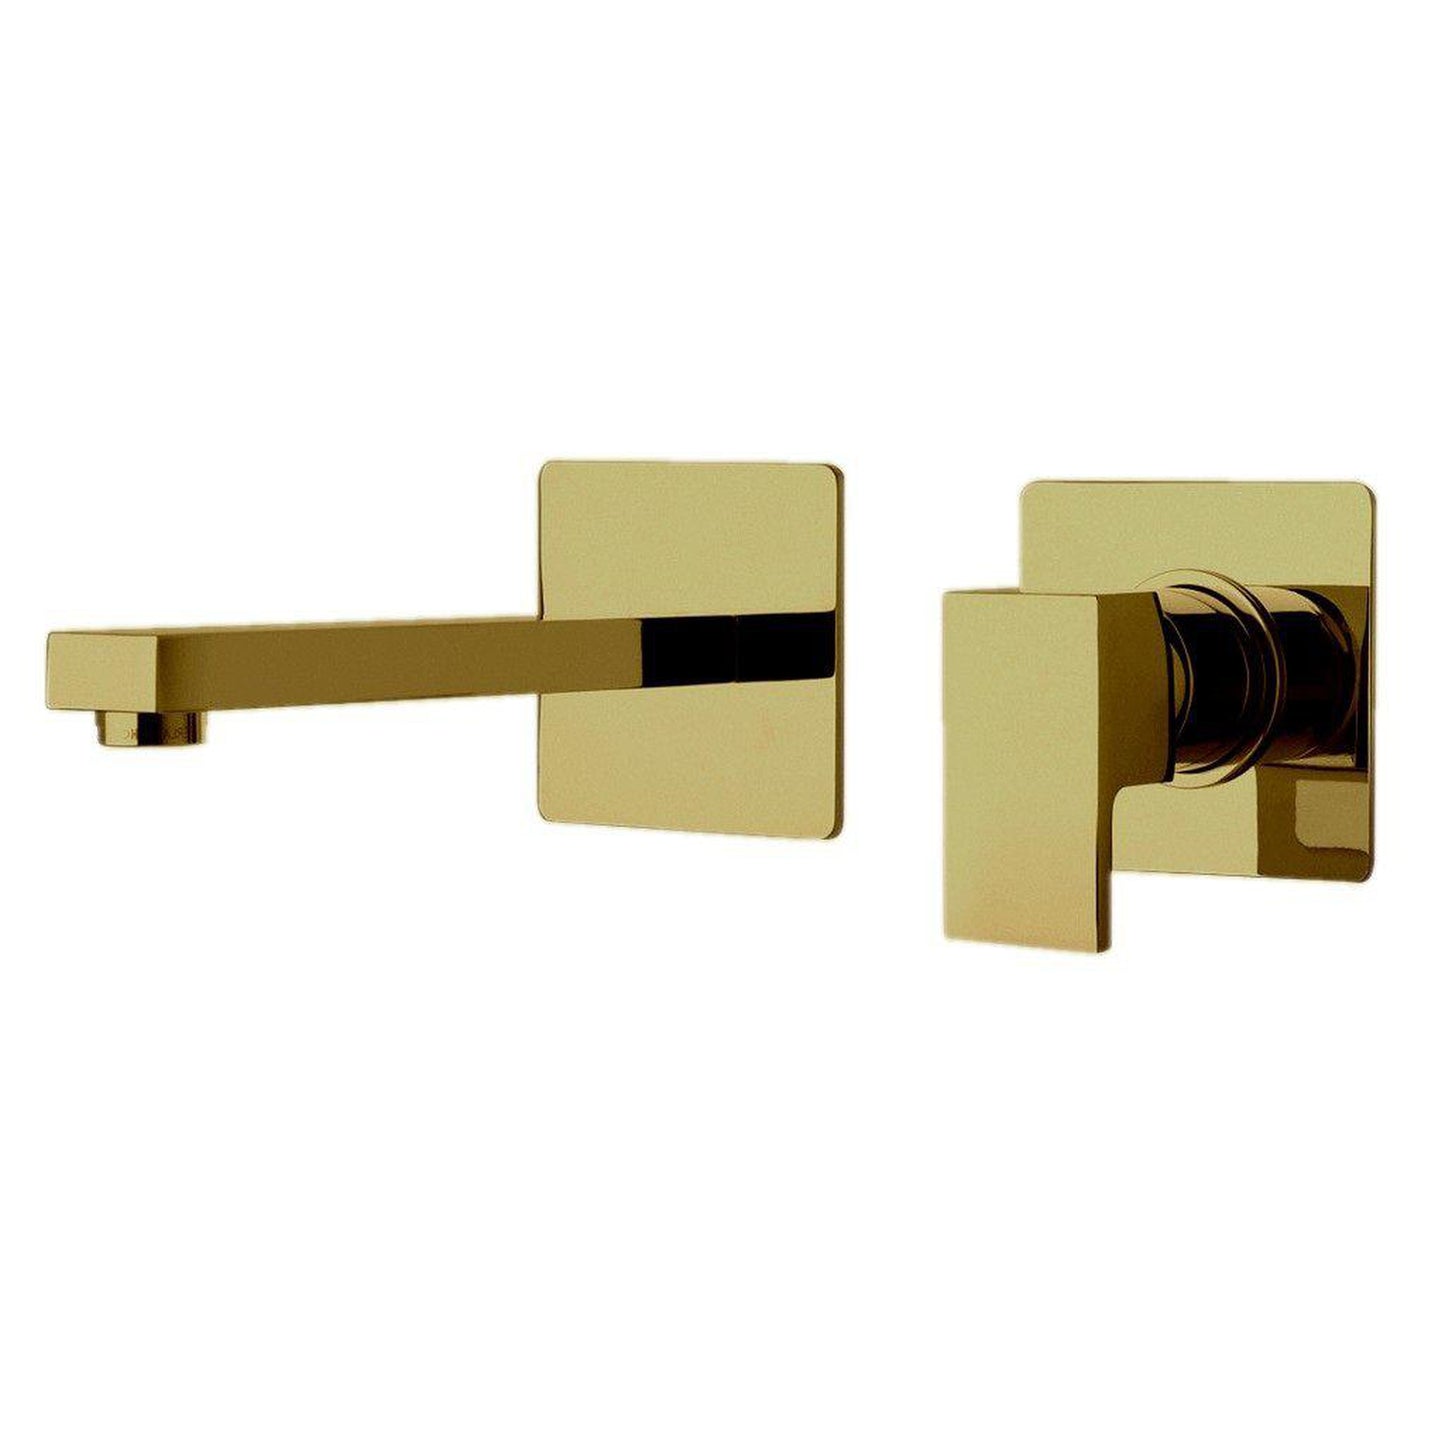 LaToscana Quadro Matt Gold Wall-Mounted Lavatory Faucet With Lever Handle